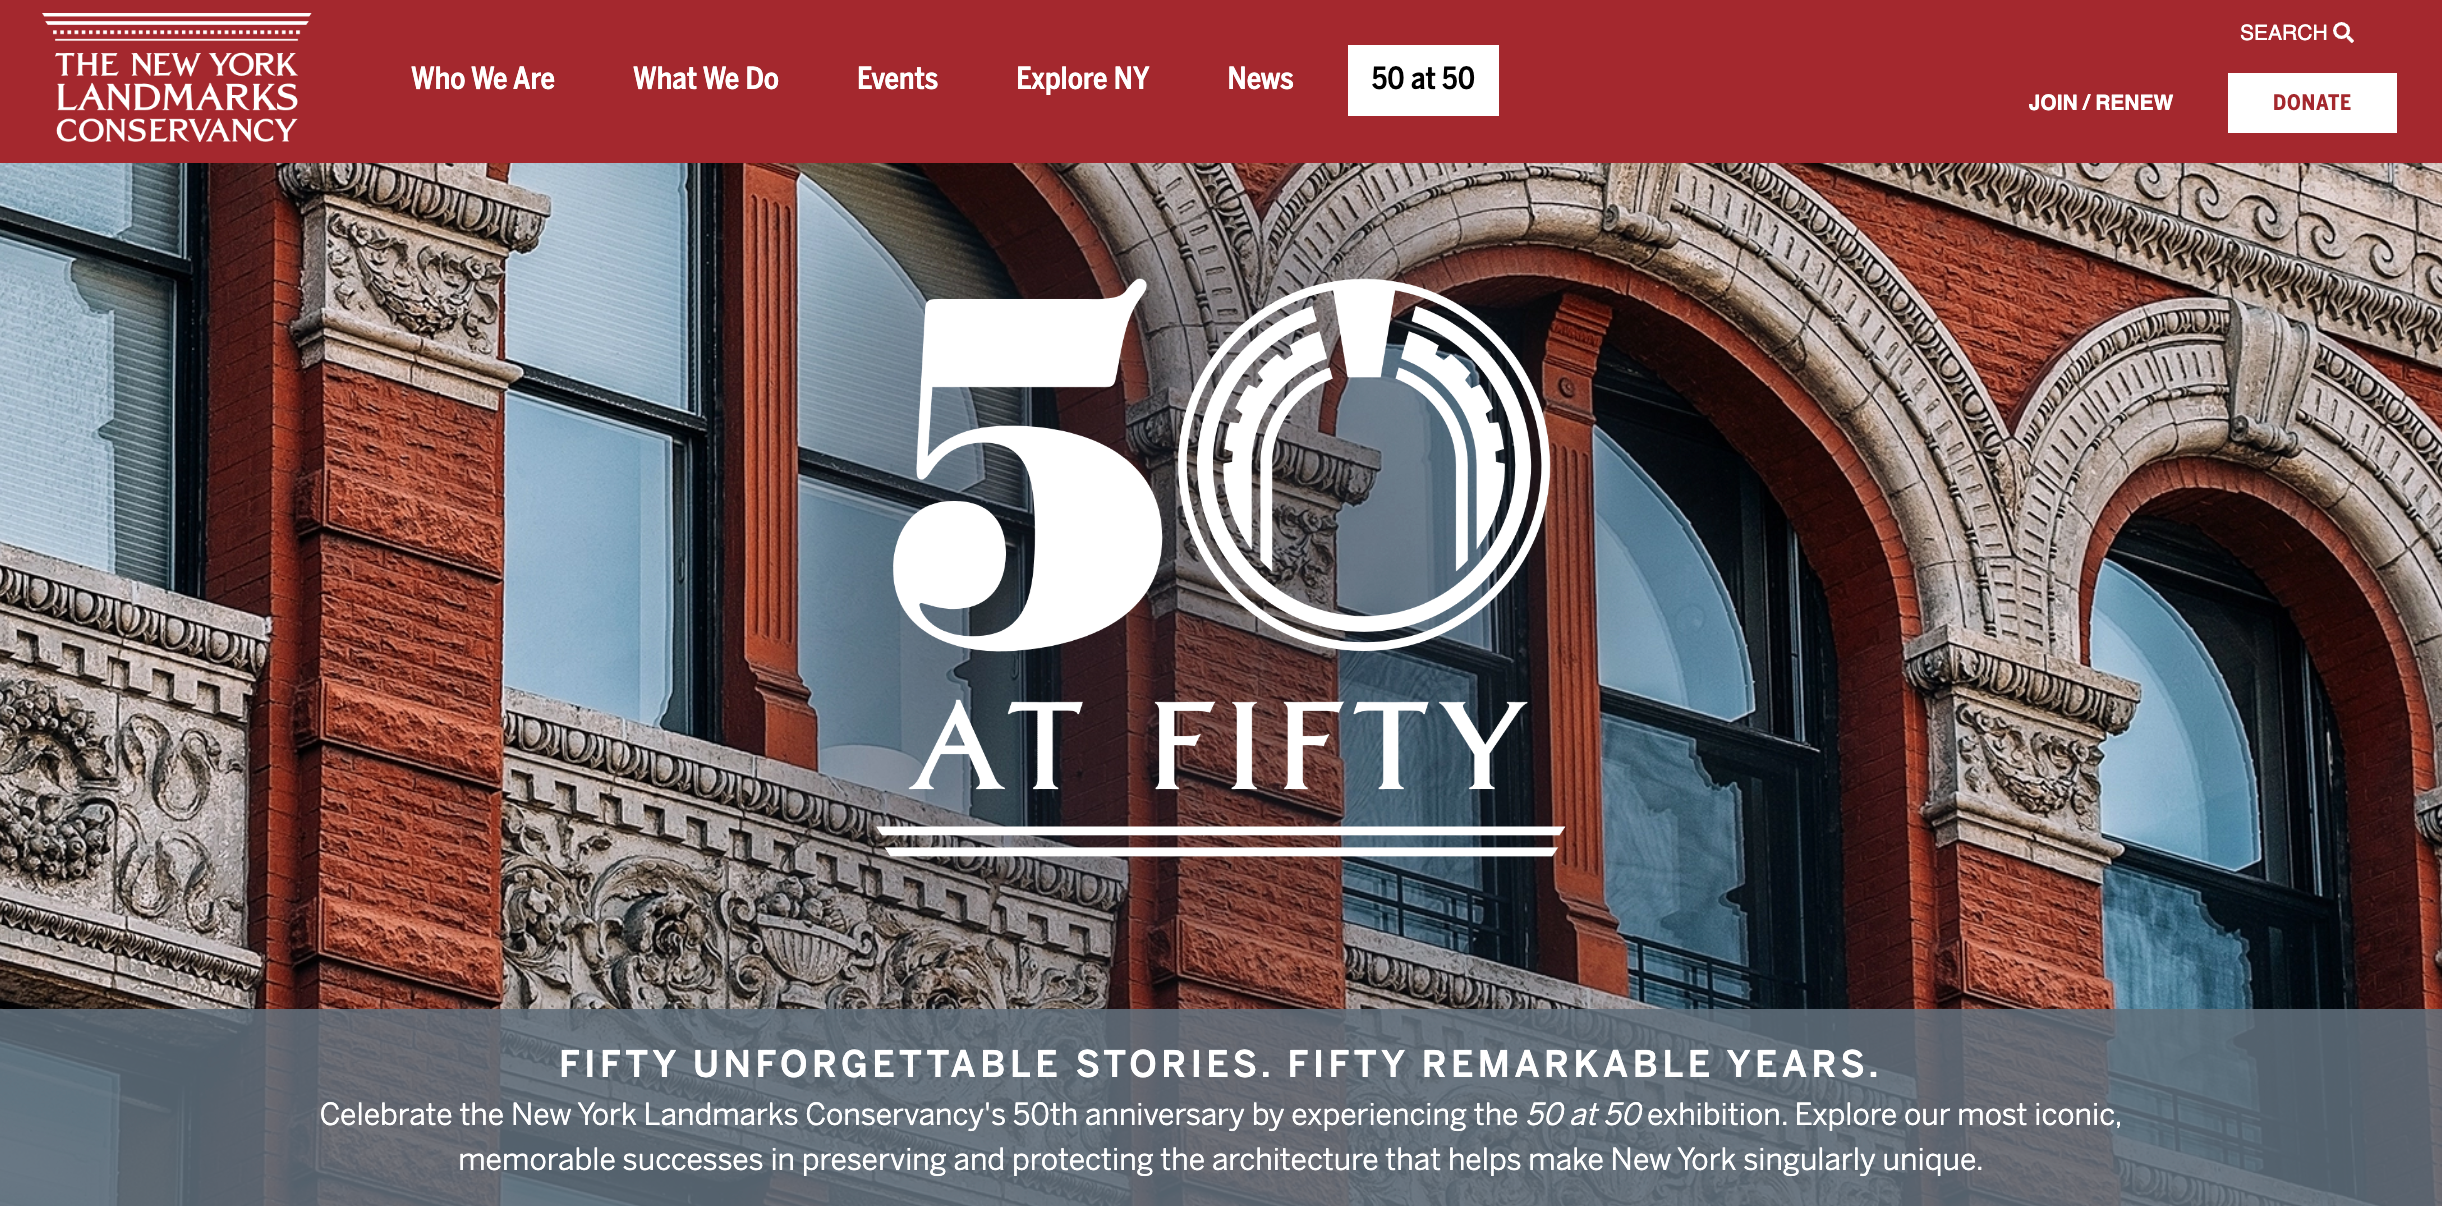 50 at 50 New York Landmarks Conservancy